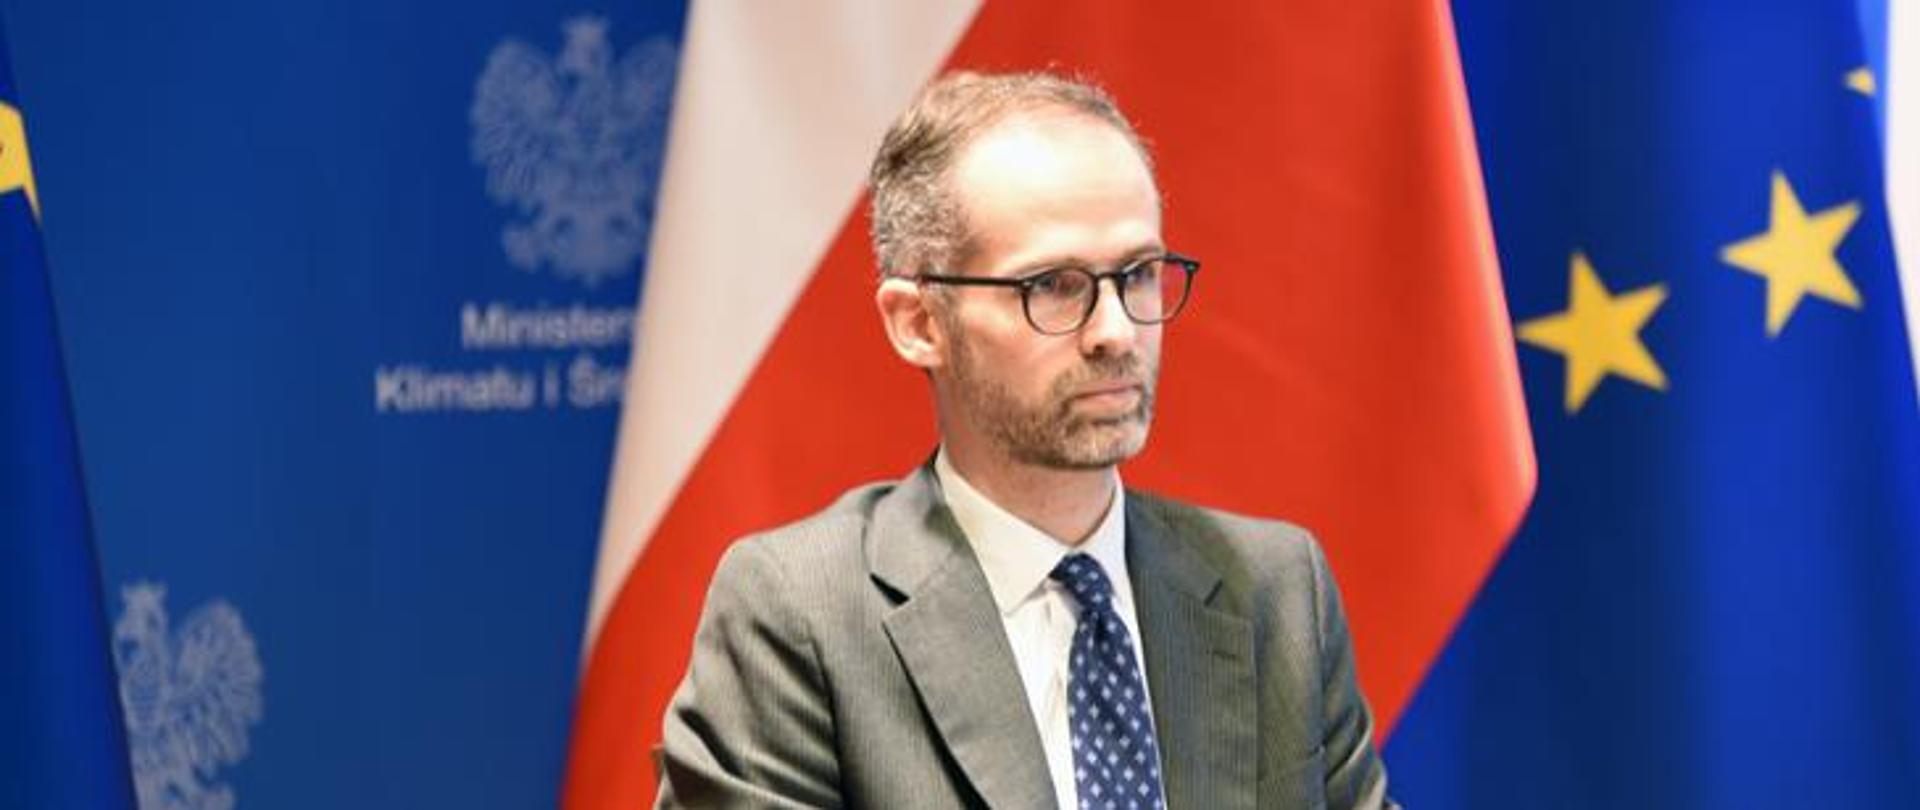 Deputy Minister Adam Guibourgé-Czetwertyński